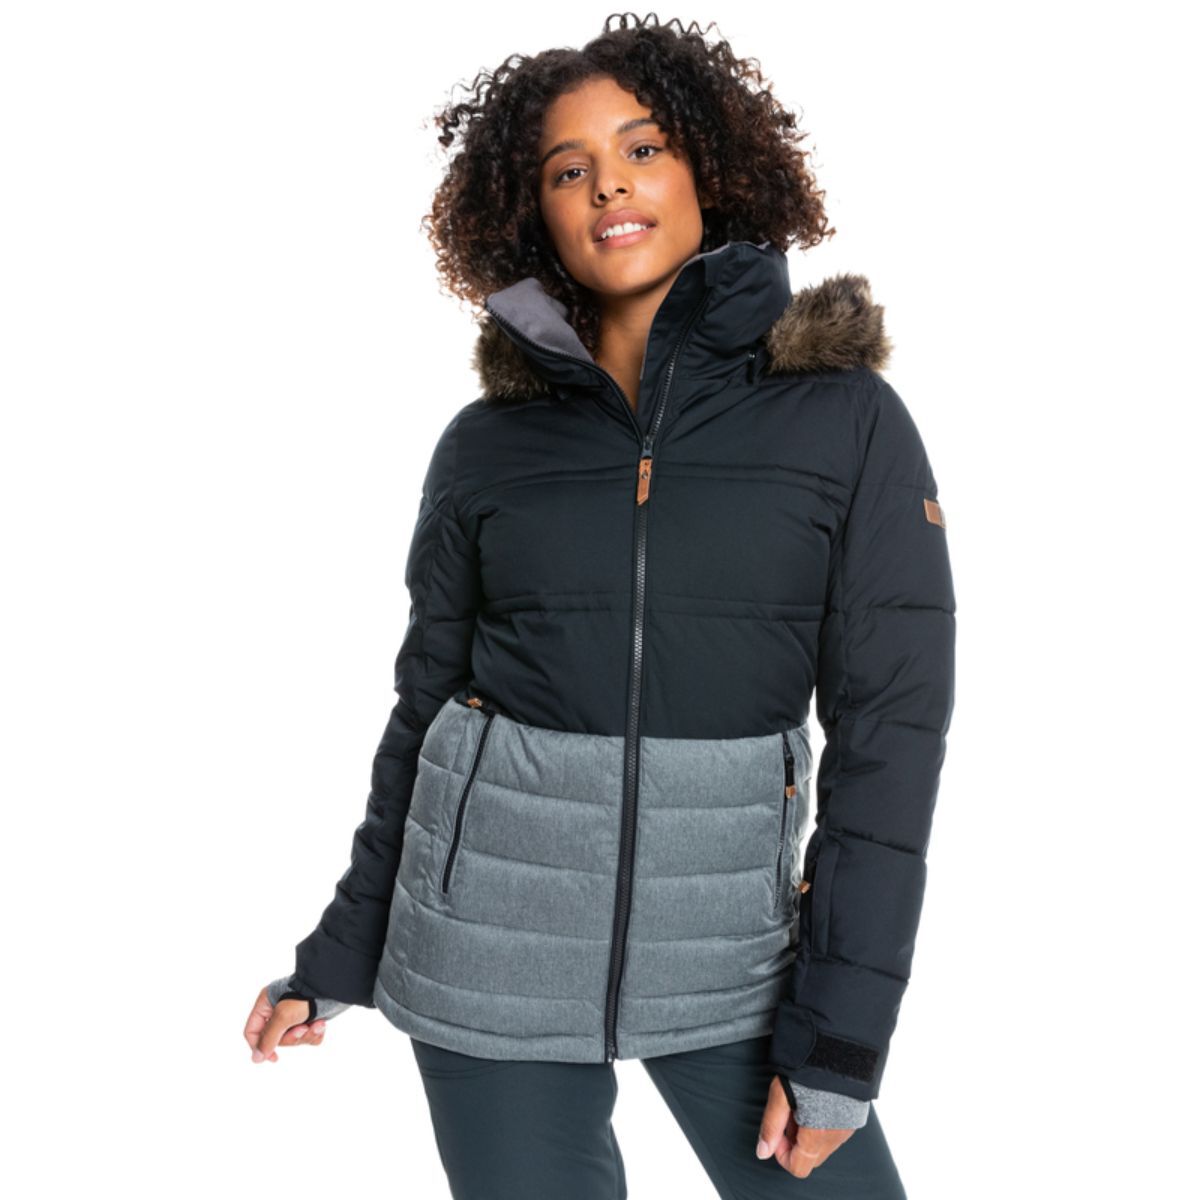 CNTRITON Women's Snowboard Ski Jacket Insulated Winter Snow Coats Snowboarding Warm Waterproof Parka for Skiing 